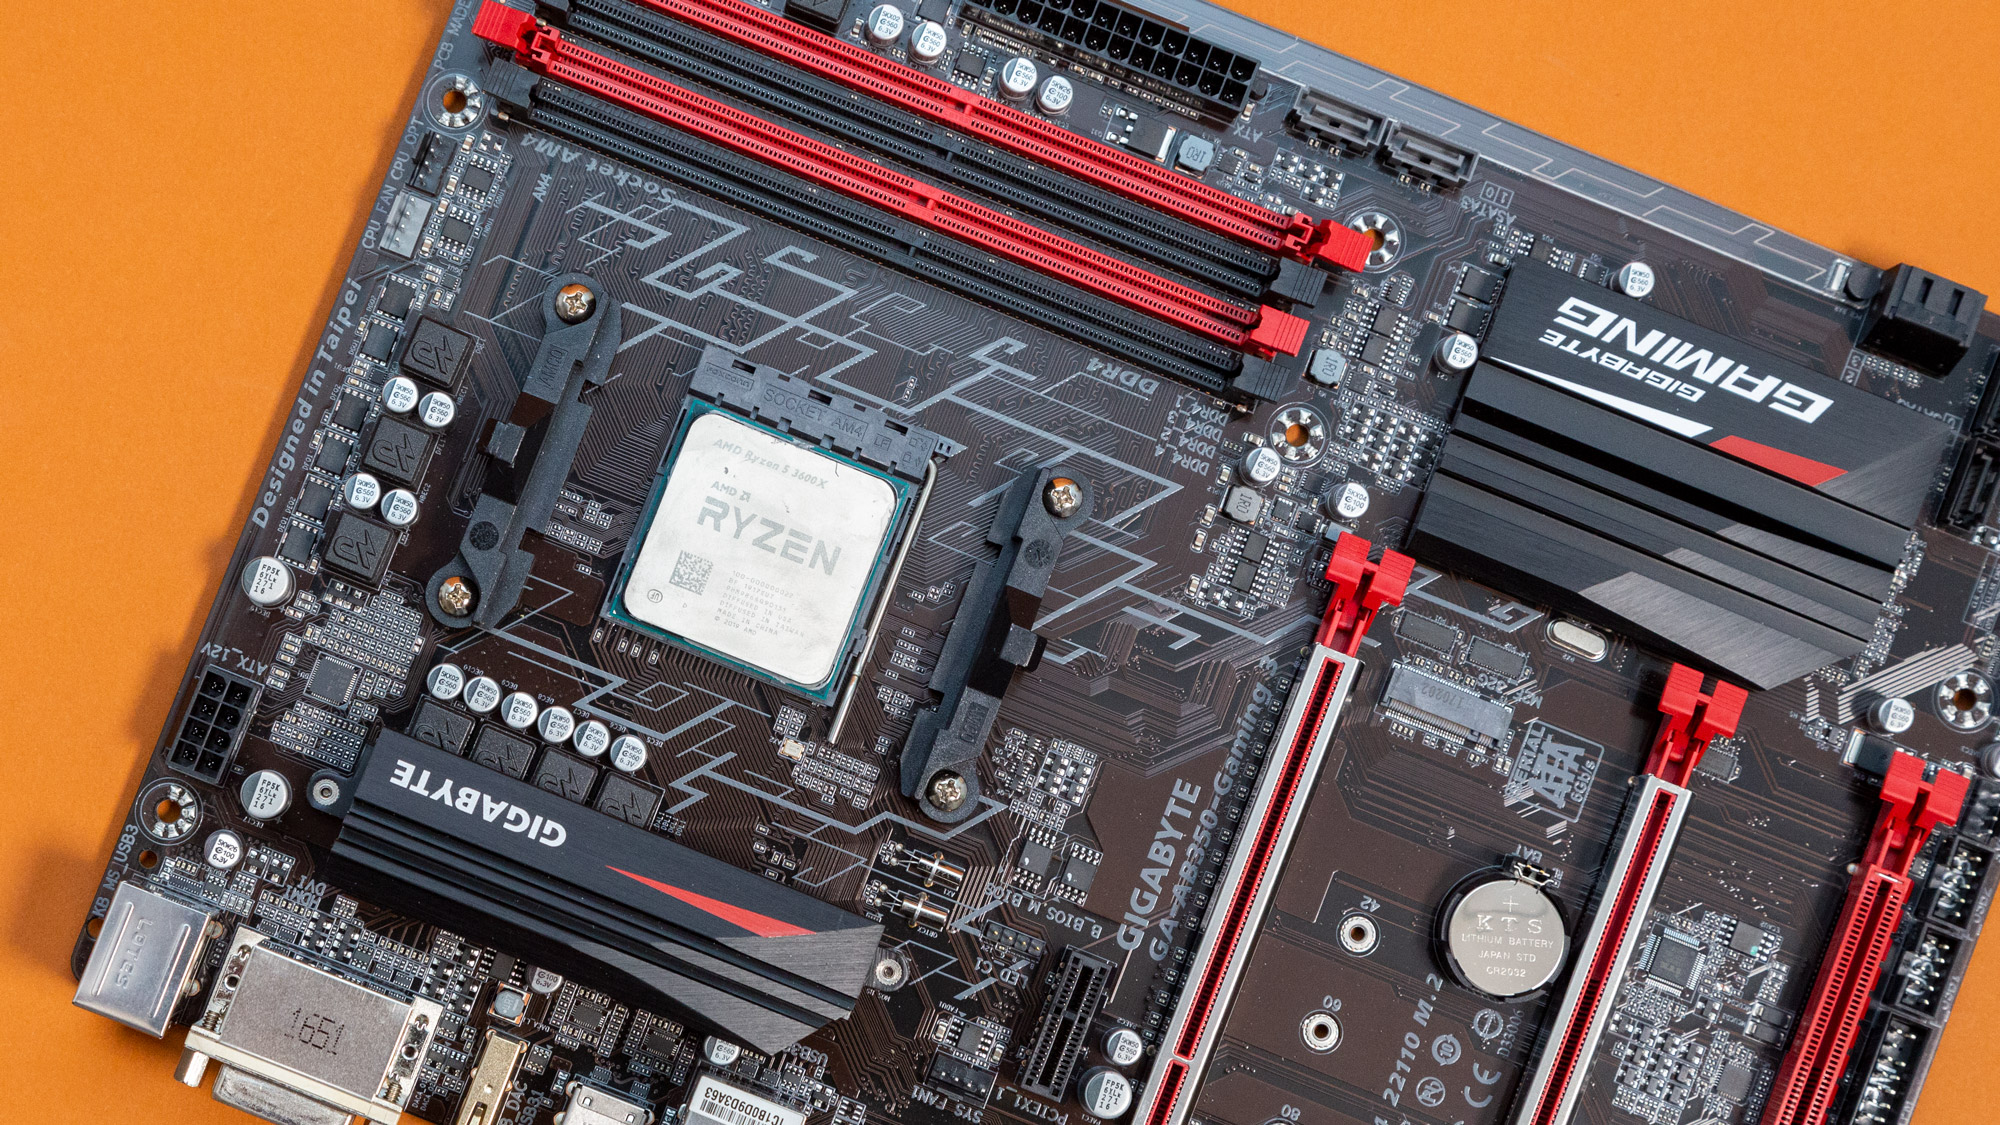 AMD Ryzen 5 3600 processor review: The best price/performance